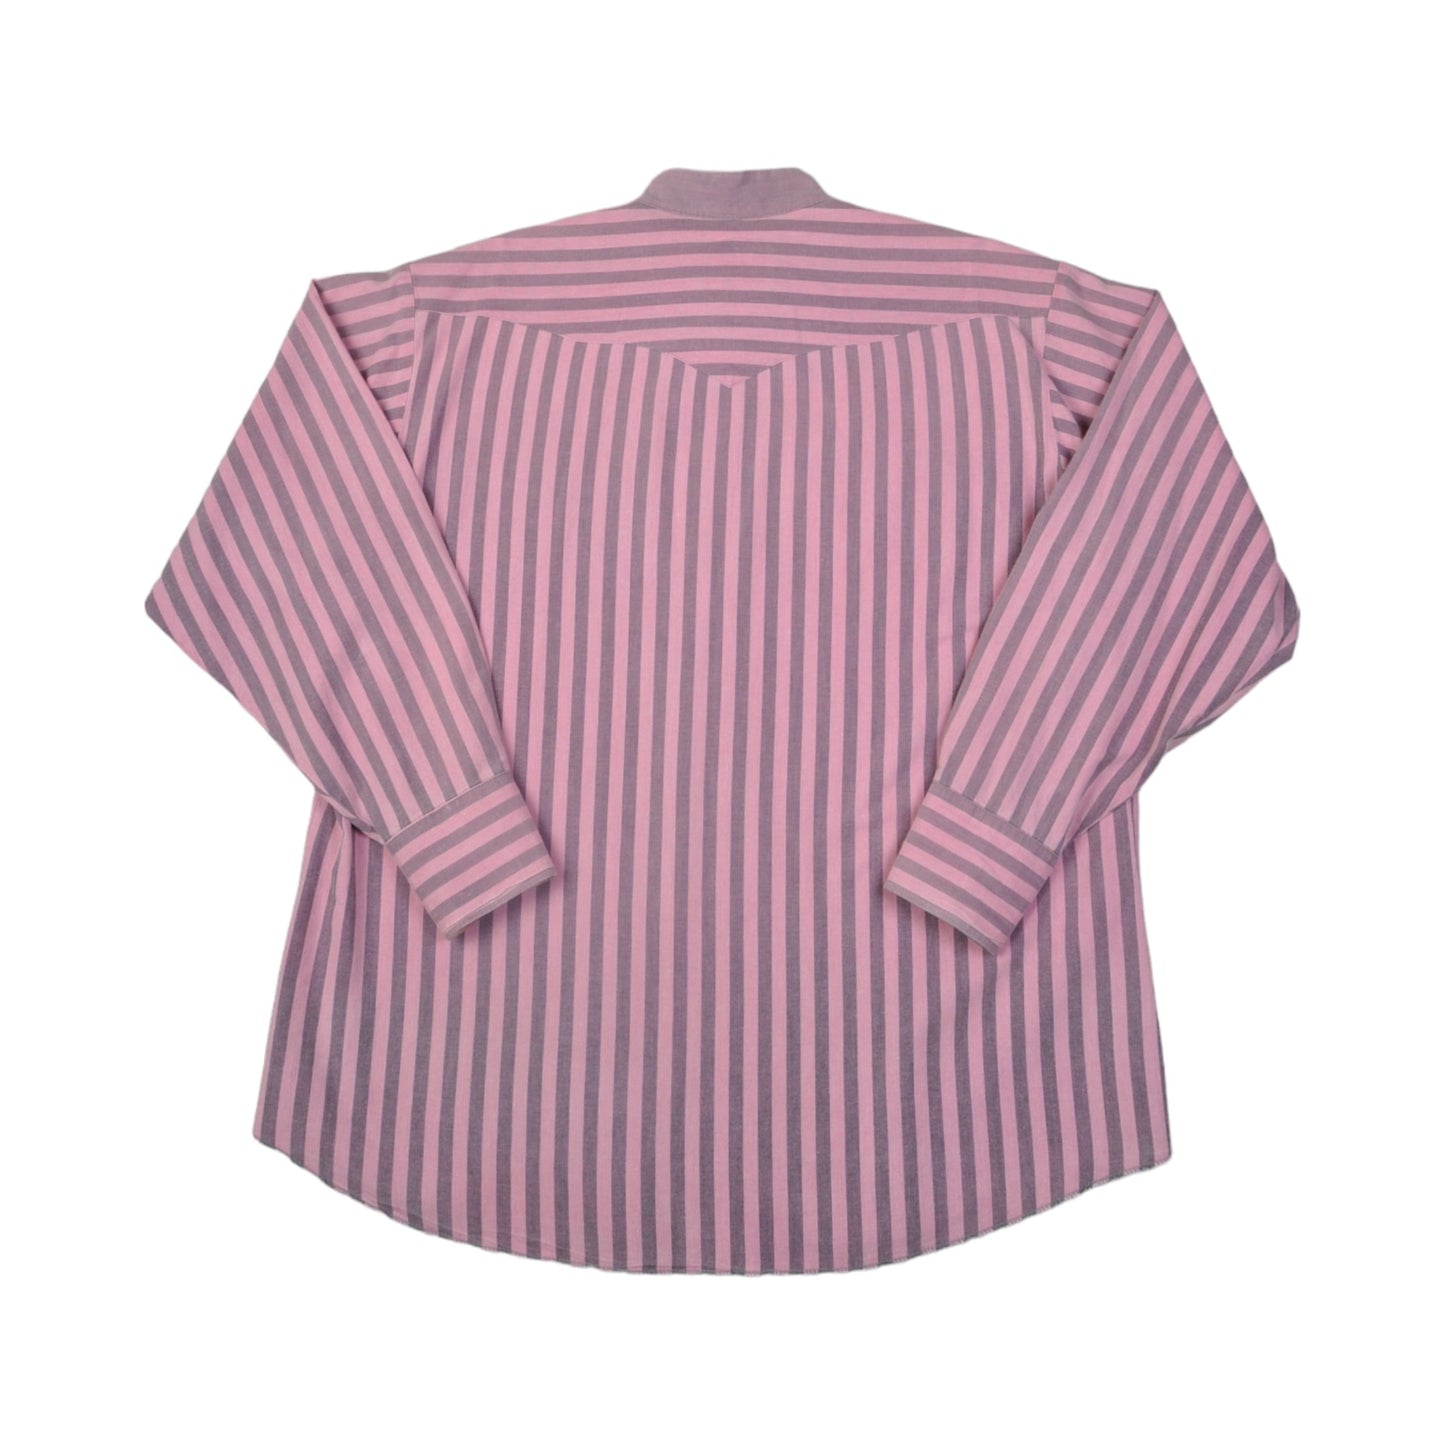 Vintage Grandad Shirt 90s Stripe Pattern Long Sleeve Pink XXL